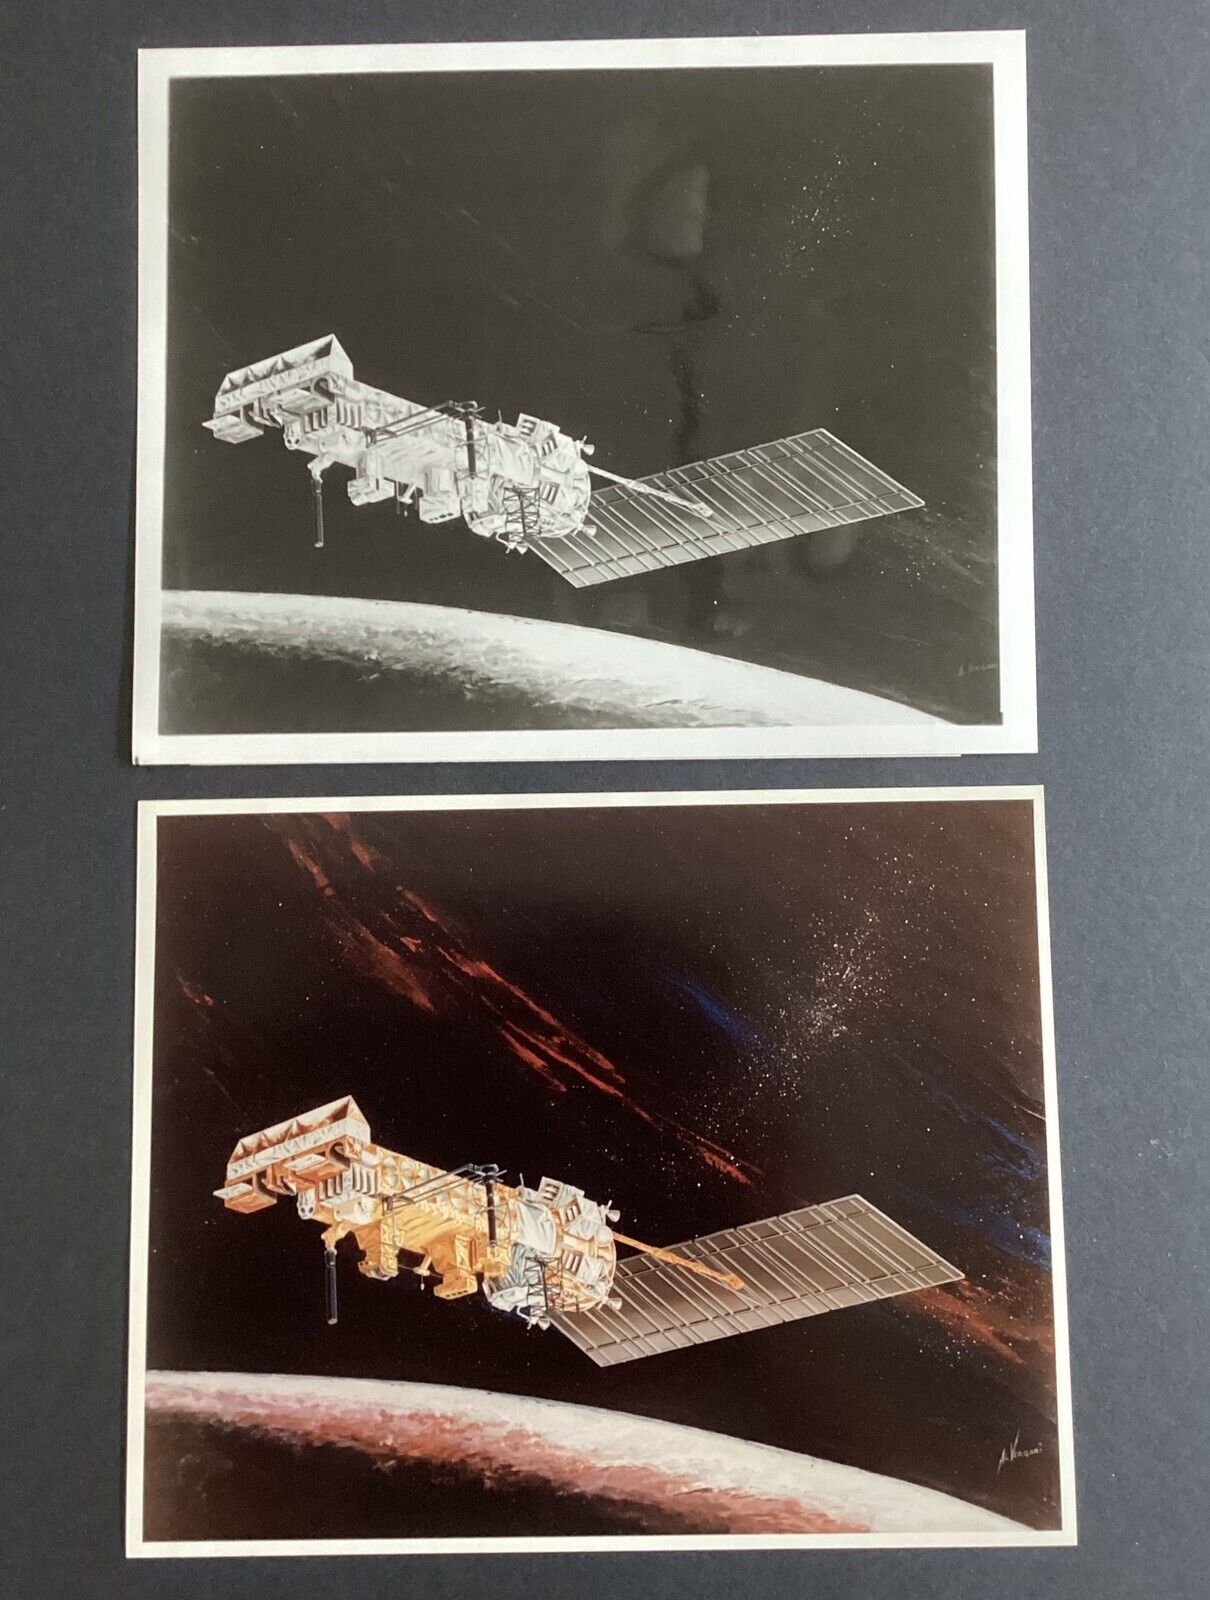 1981-1982 NASA RCA TIROS-N/NOAA “Search and Rescue” Spacecraft Photograph Lot B